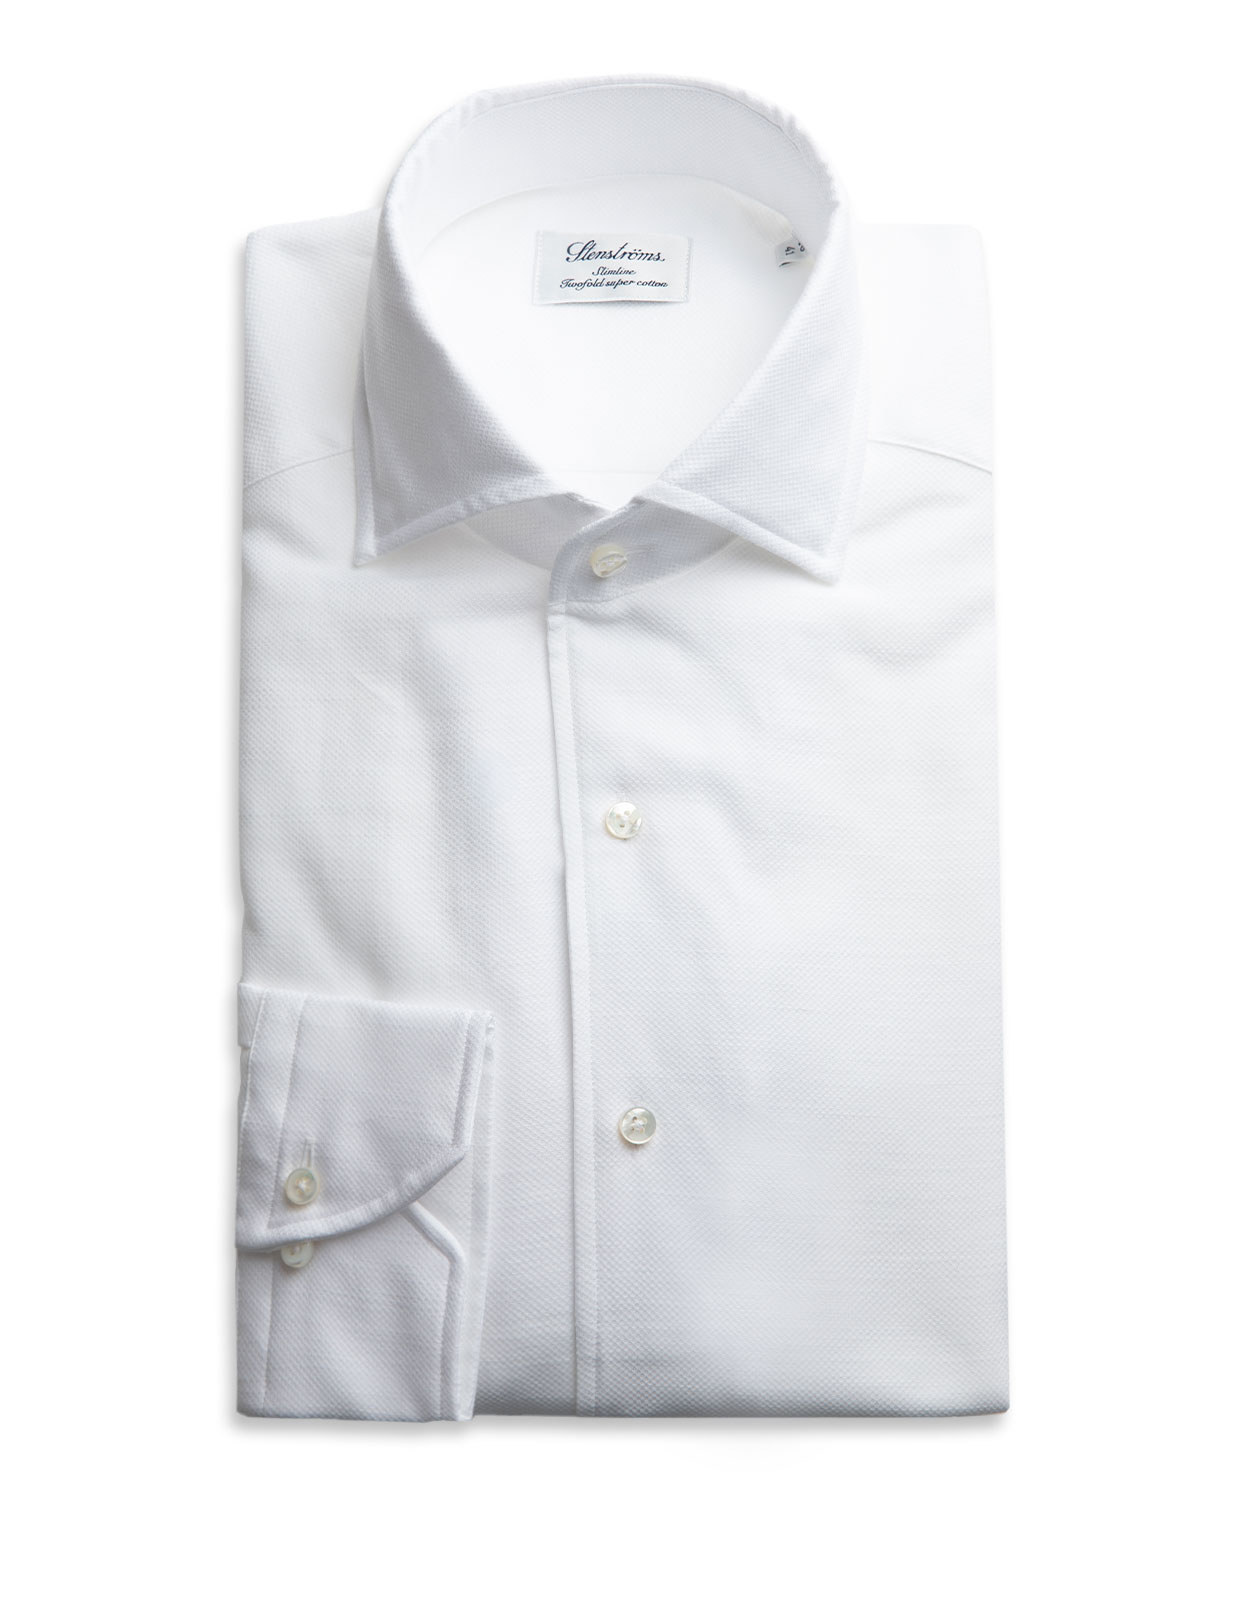 Slimline Shirt White